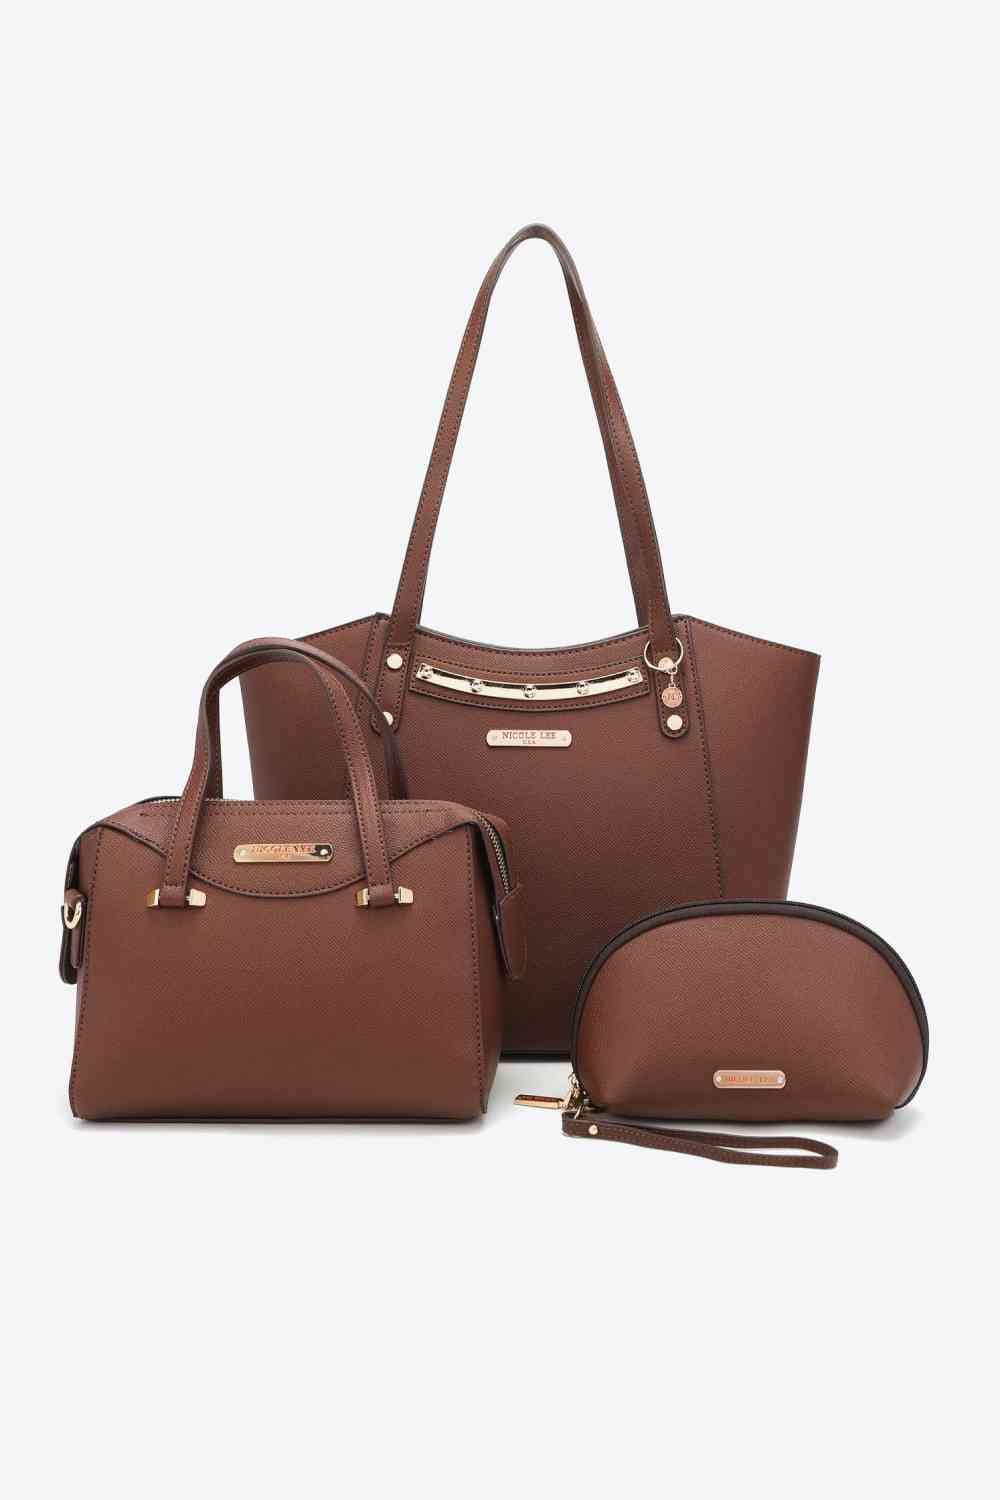 The802Gypsy Handbags, Wallets & Cases Chocolate / One Size GYPSY-Nicole Lee USA-At My Best Handbag Set